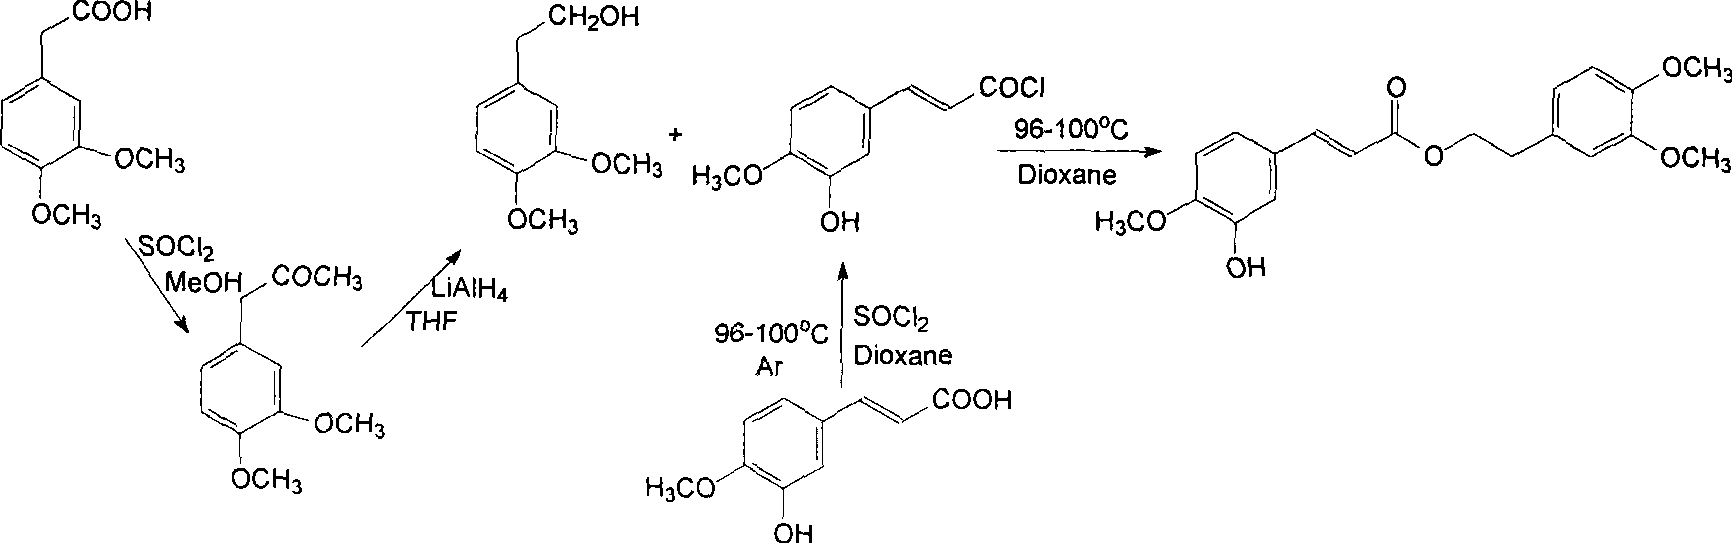 Preparation of 3-(3,4-dihydroxyphenyl)-acrylic acid 2-(3,4-dihydroxyphenyl)-ethyl ester and derivative phenyl acrylic acid phenyl alkyl ester compound